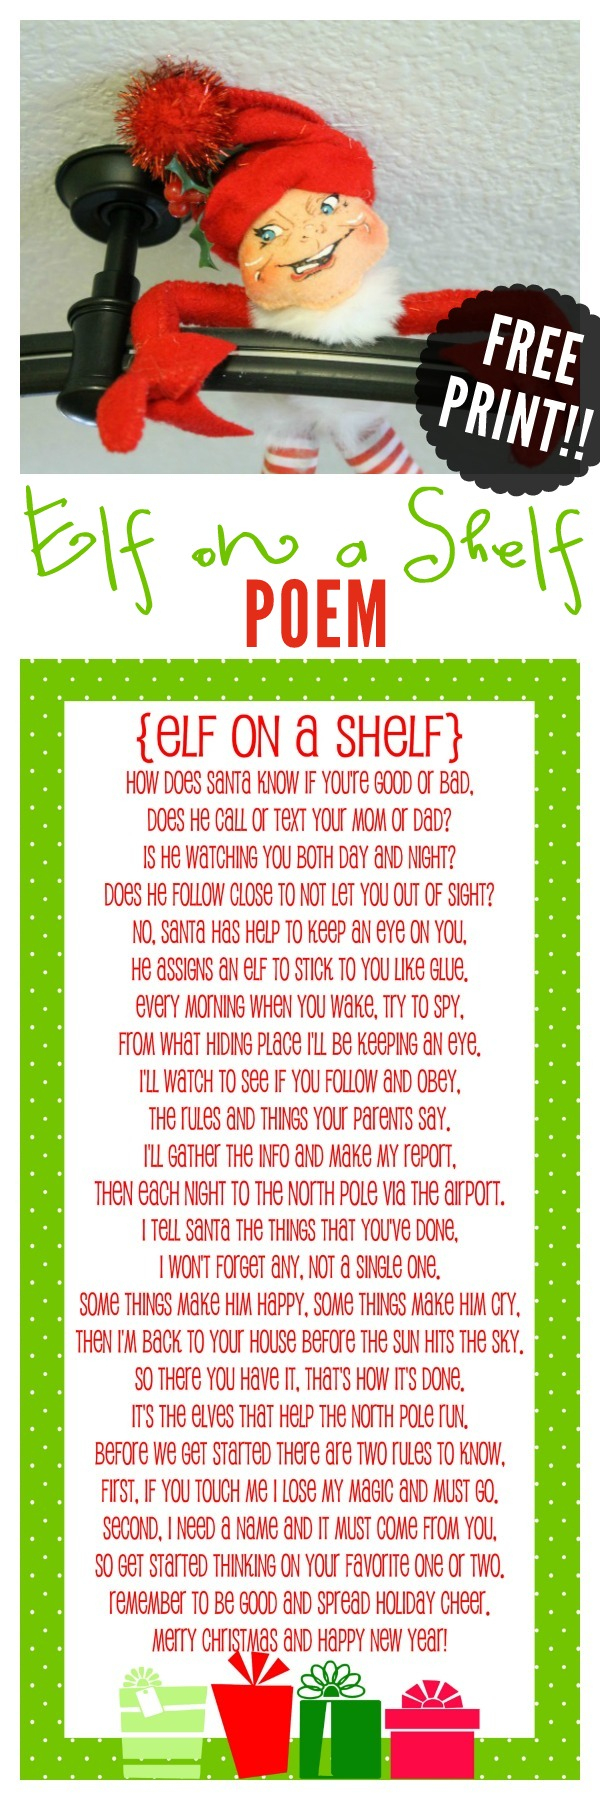 Elf On The Shelf Story - Free Printable Poem | Christmas Help | Elf - Free Printable Elf On The Shelf Story